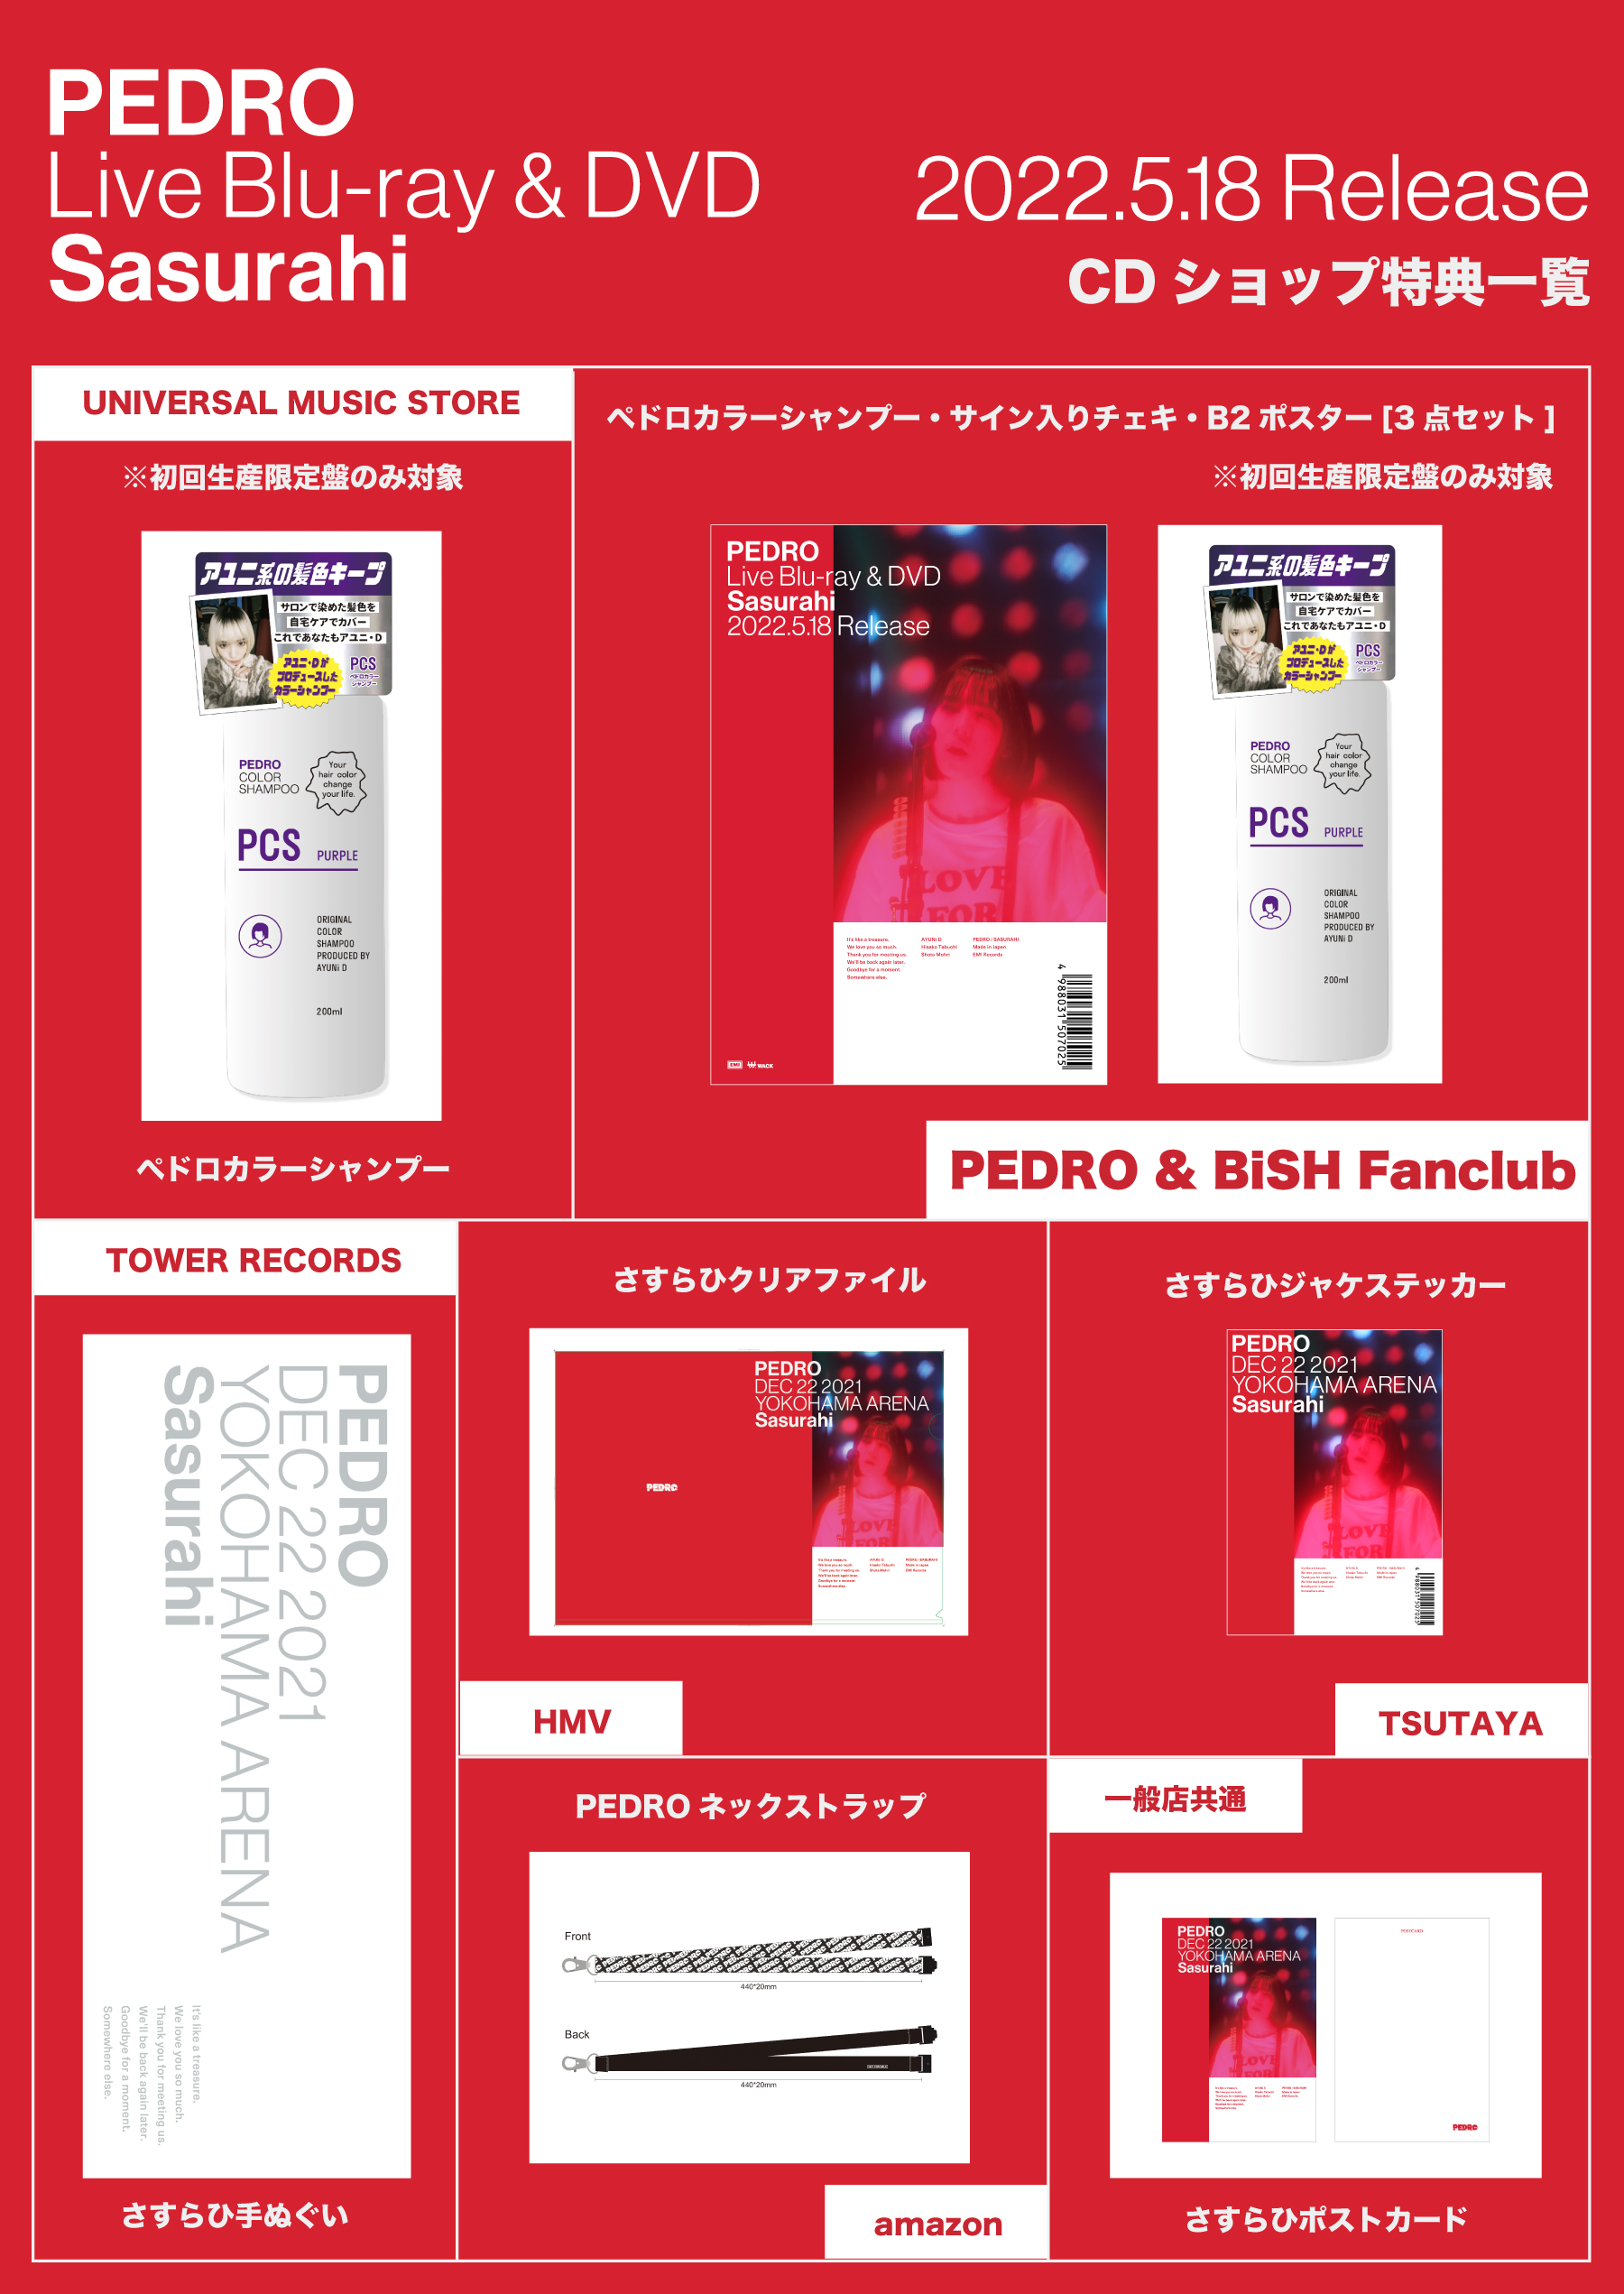 PEDRO 初回生産限定盤 cd dvd 2点セットアユニD - ミュージック